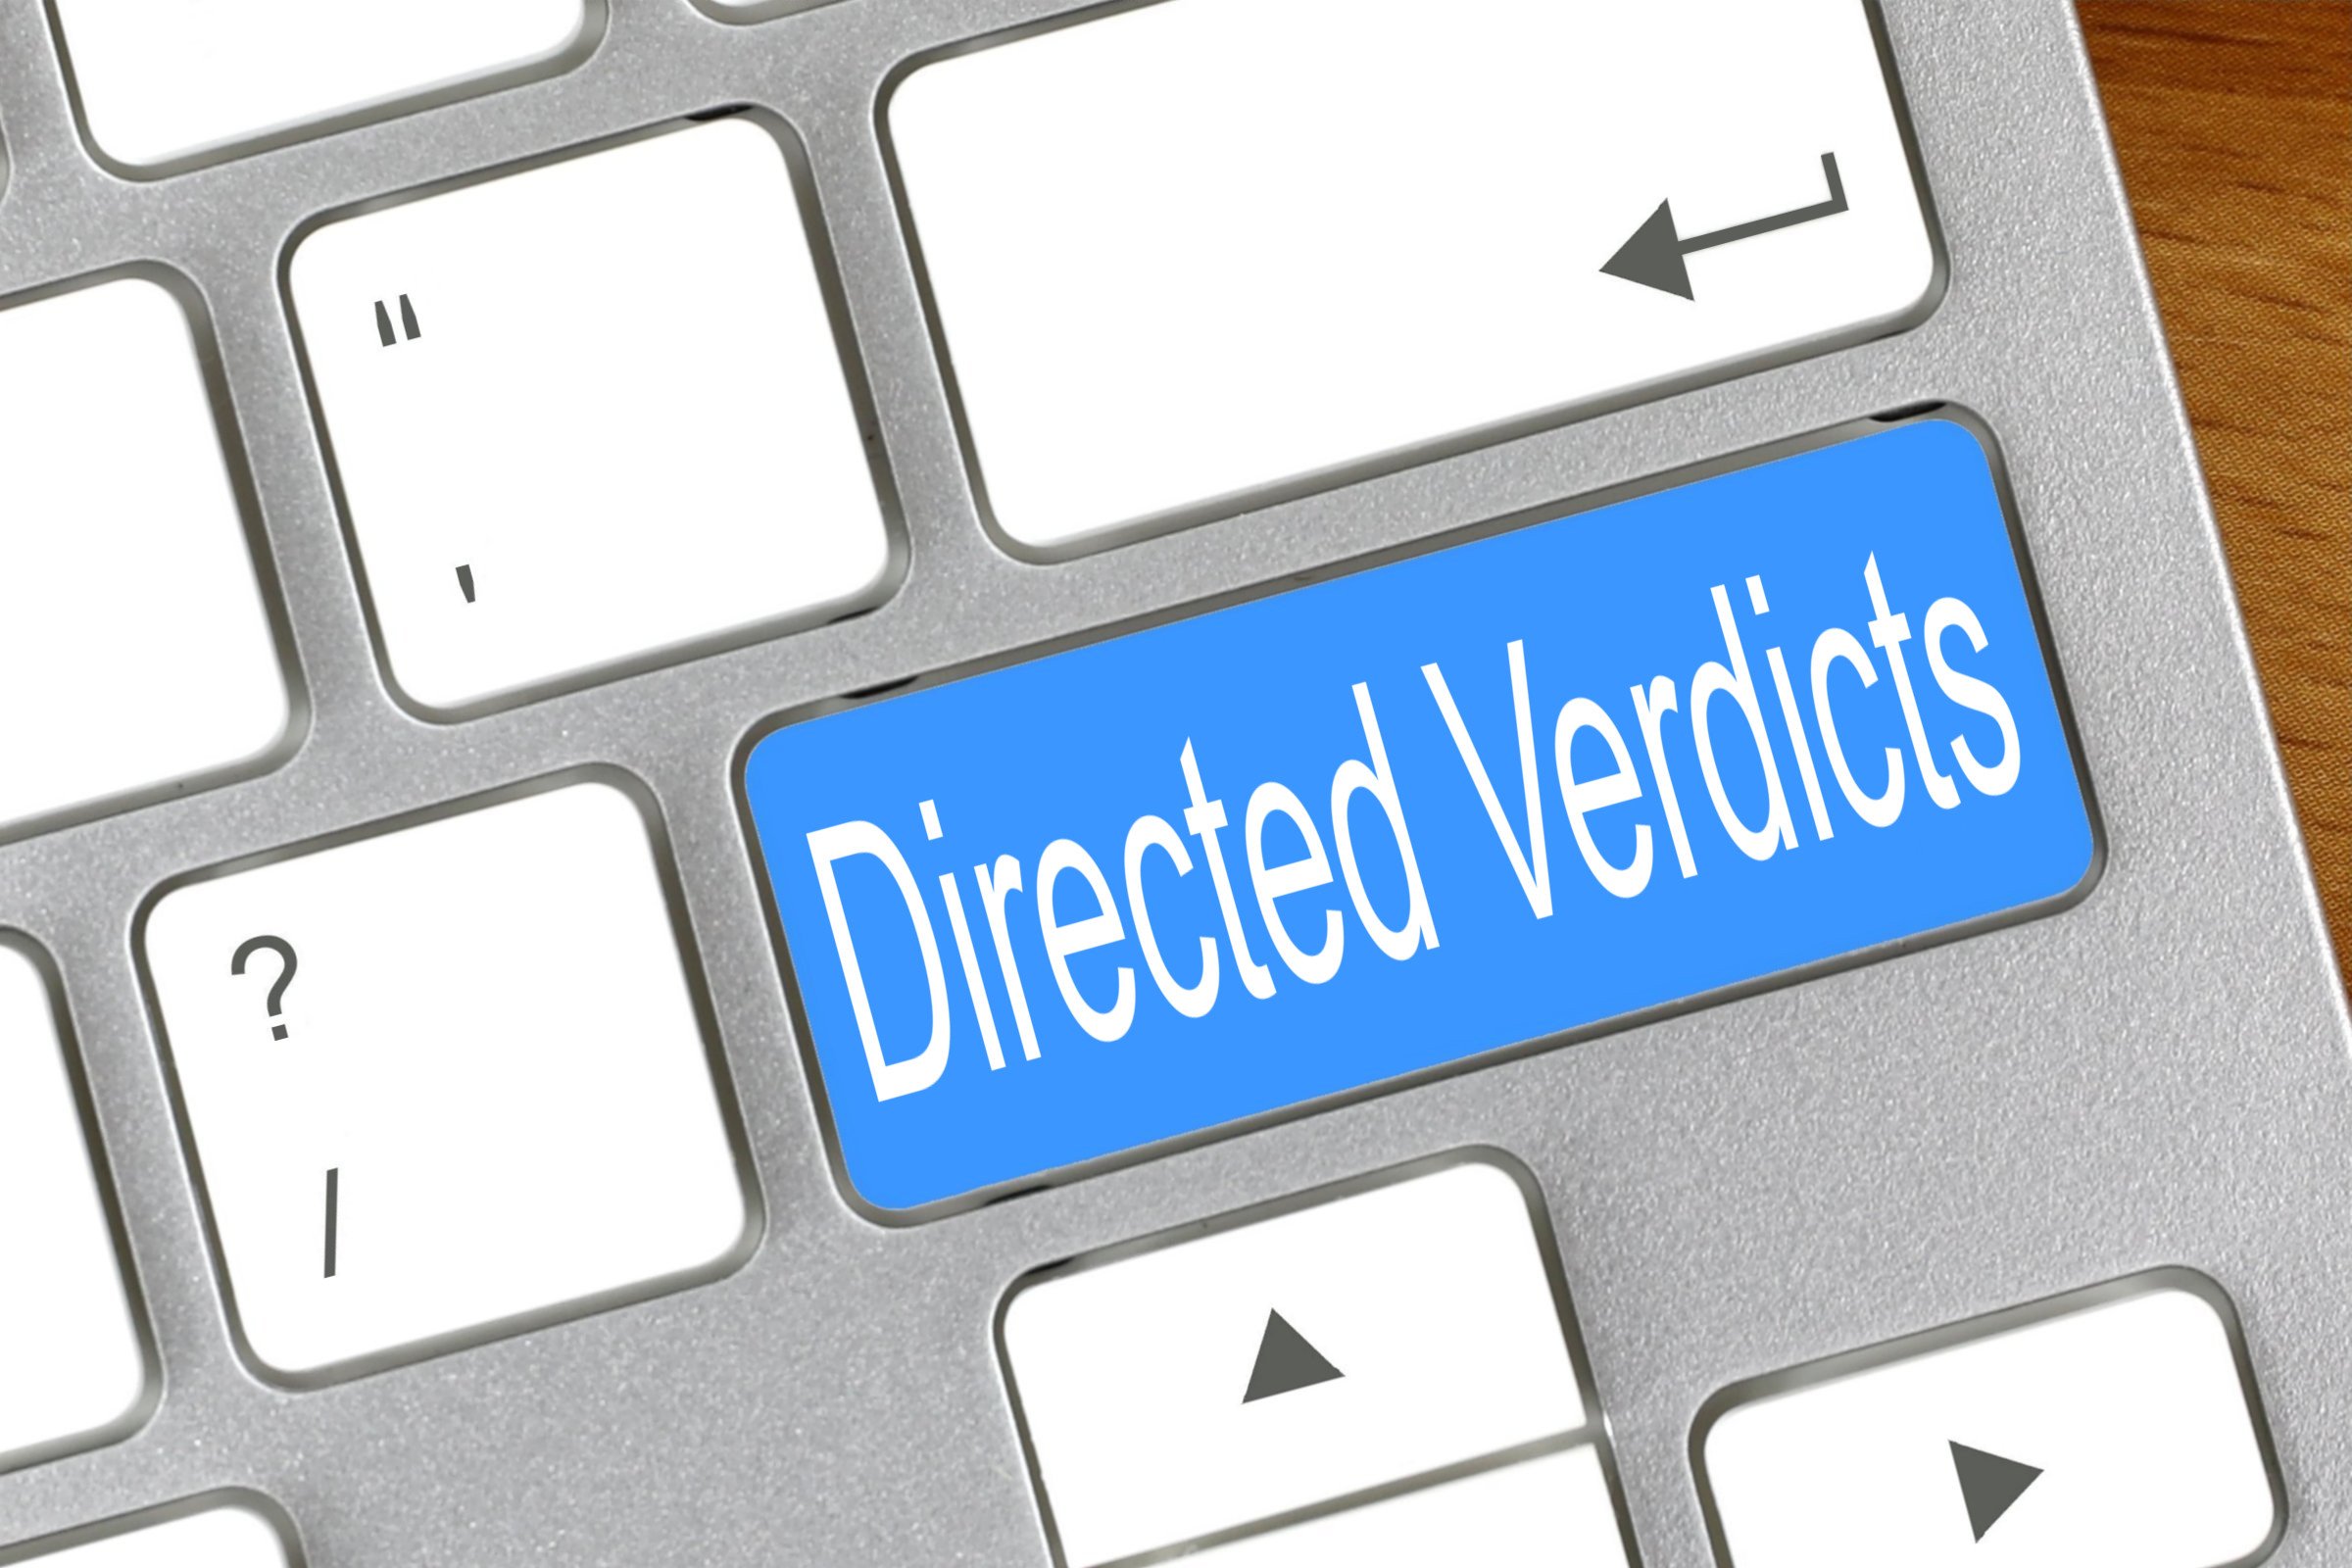 directed verdicts